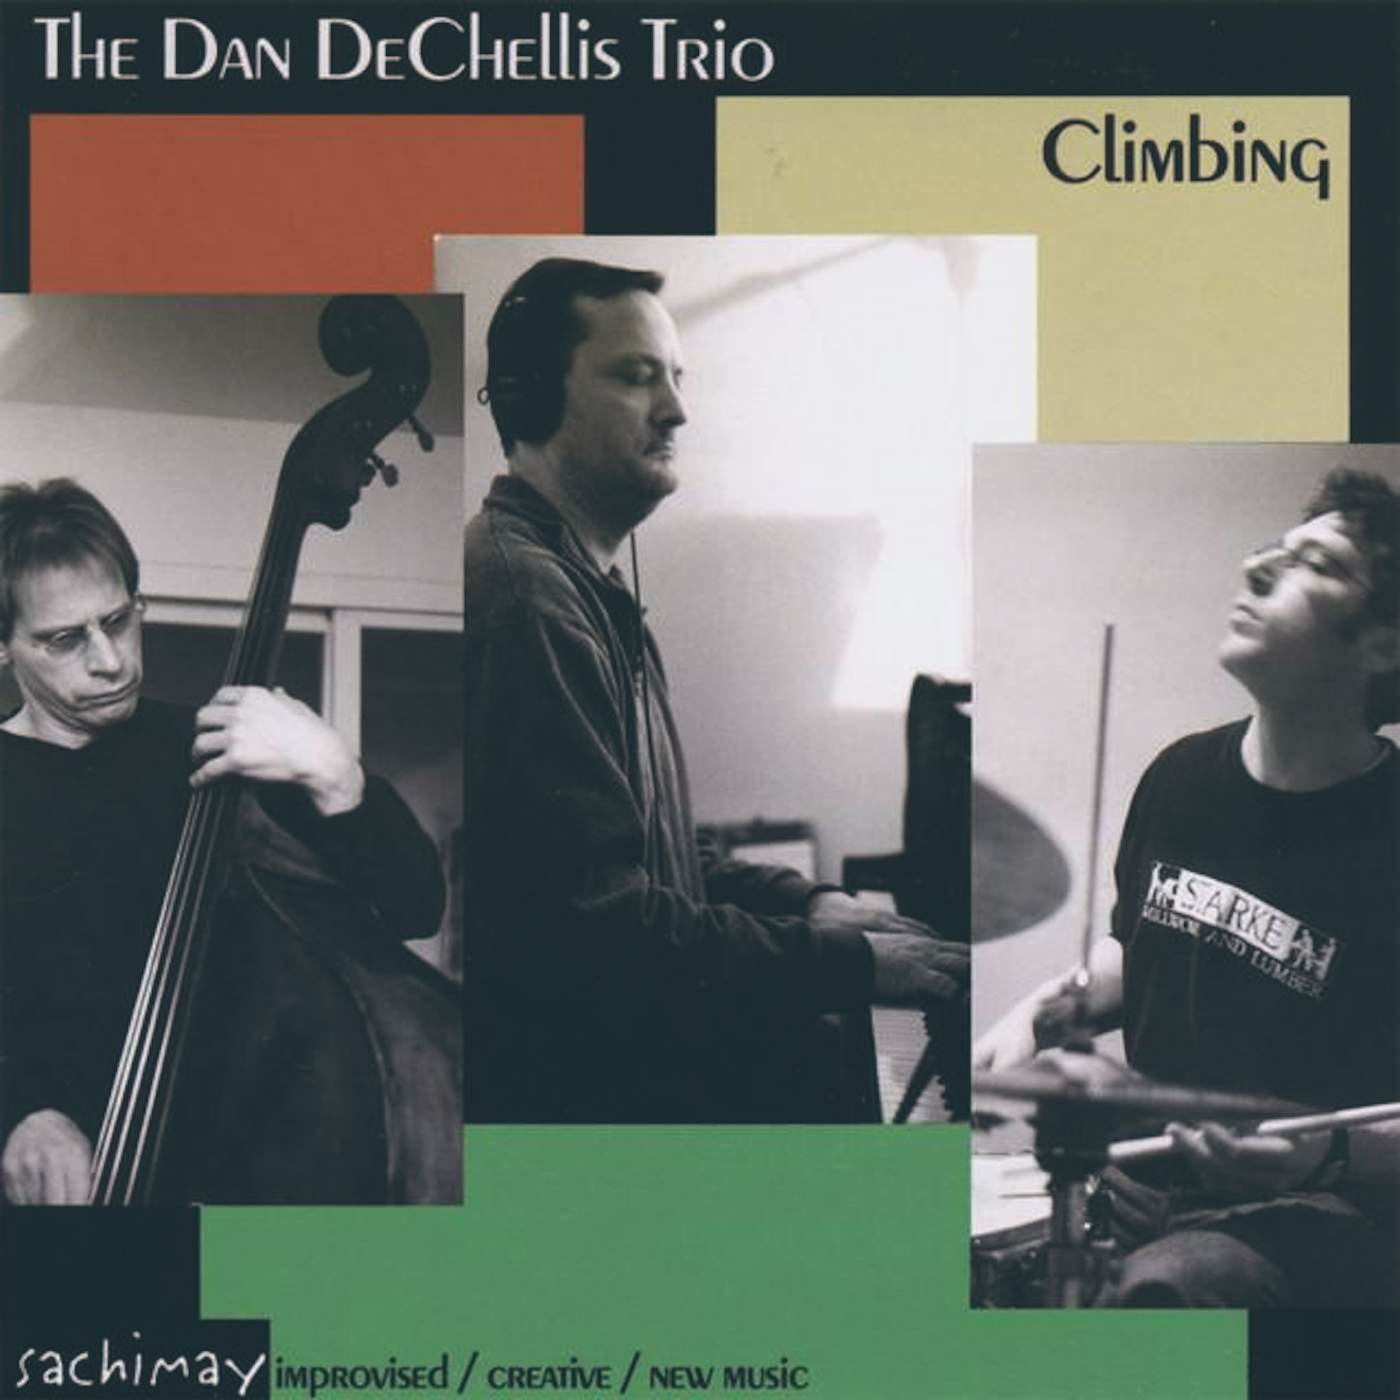 Dan DeChellis Trio